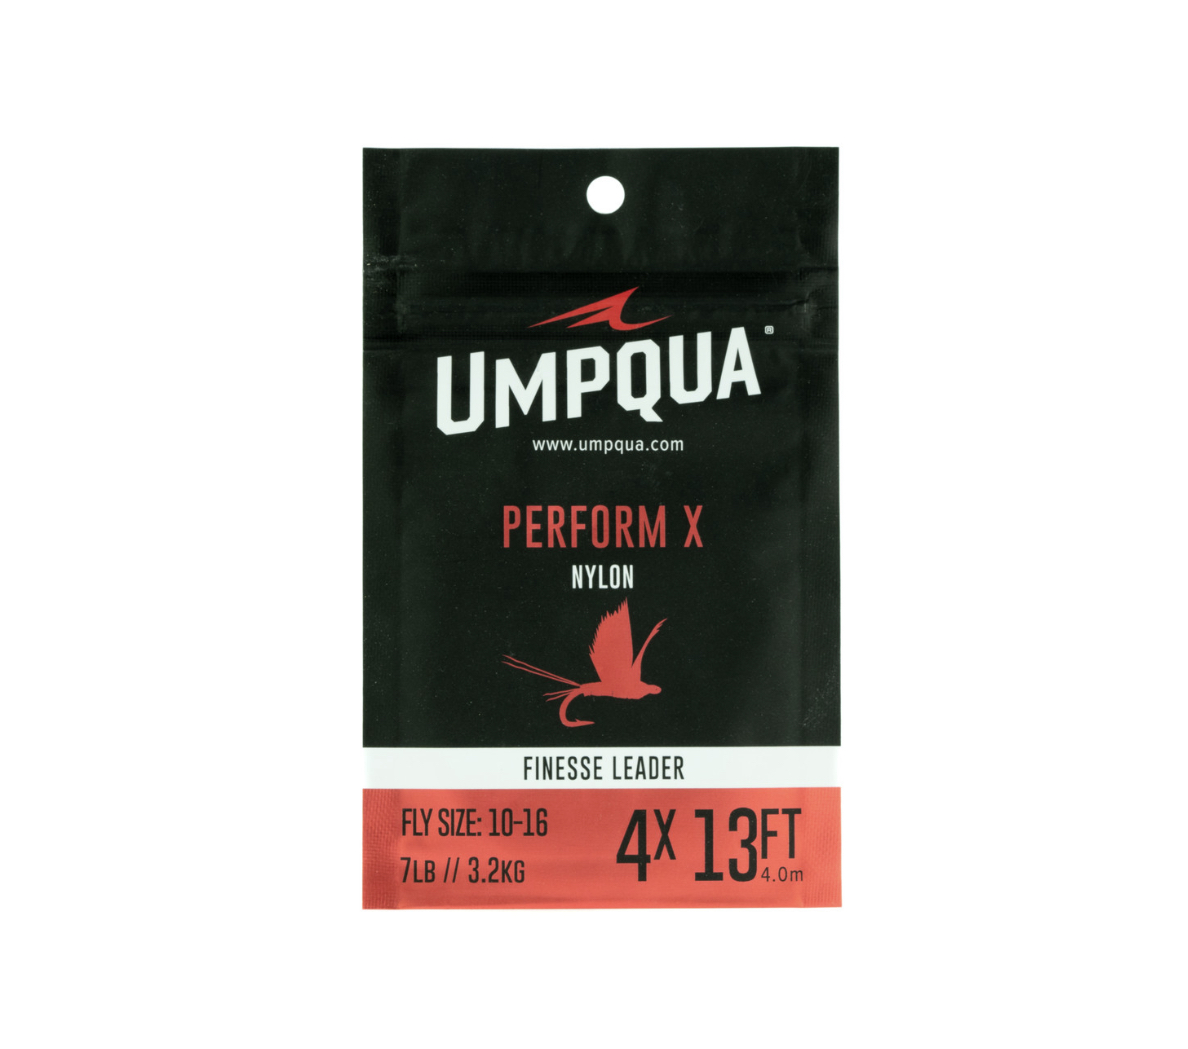 Umpqua Perform X Nylon Finesse Leader - 13ft - 5X - 5.5lb